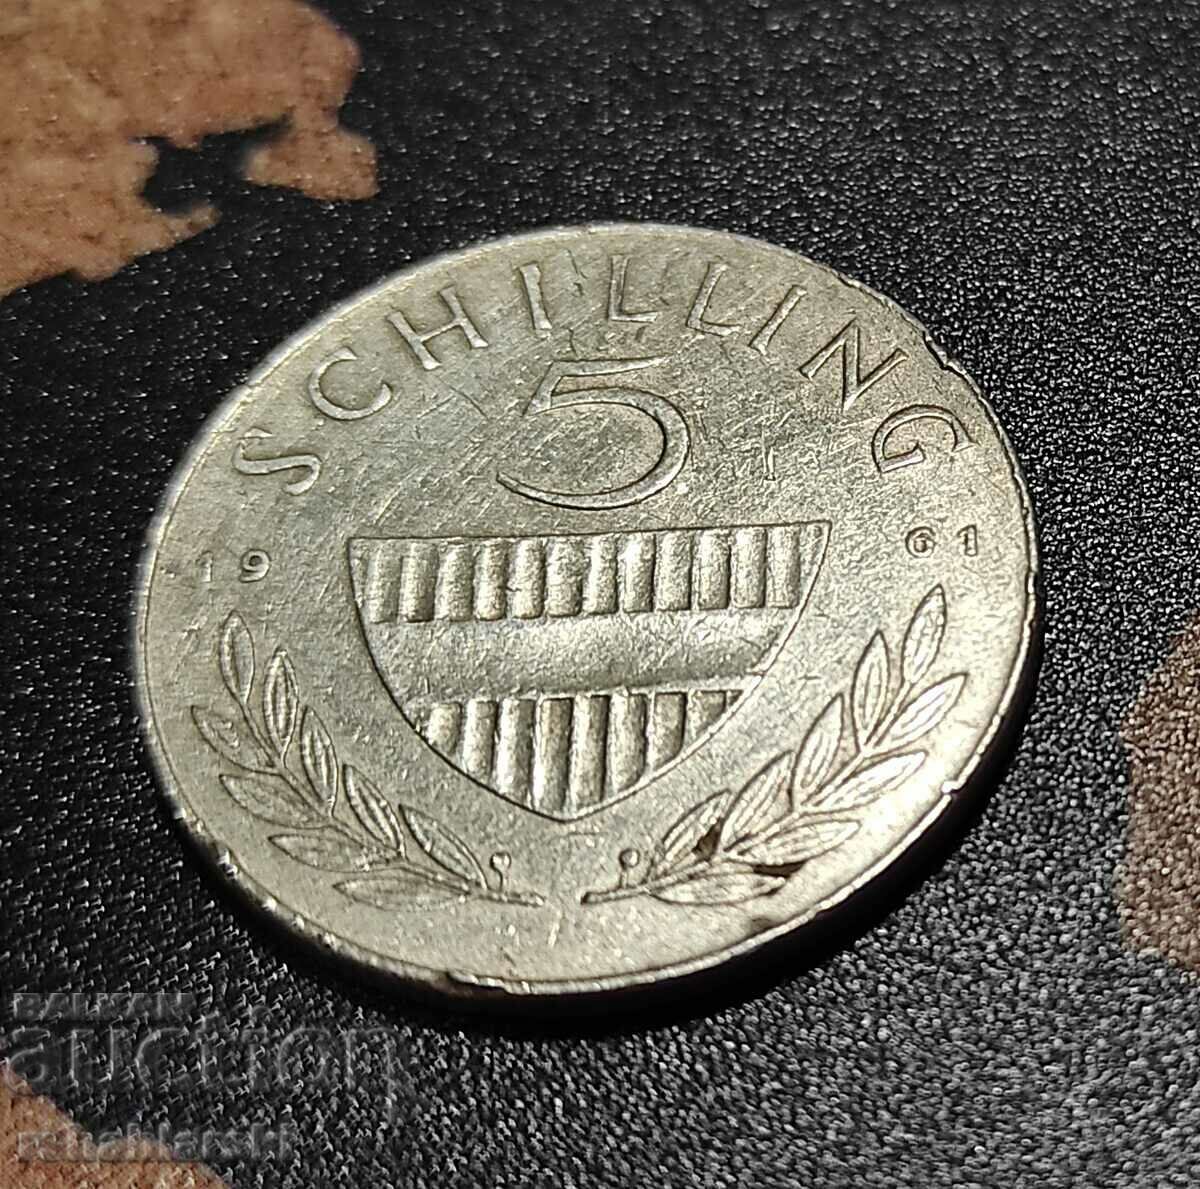 5 șilingi, 1961 - Argint 0,640